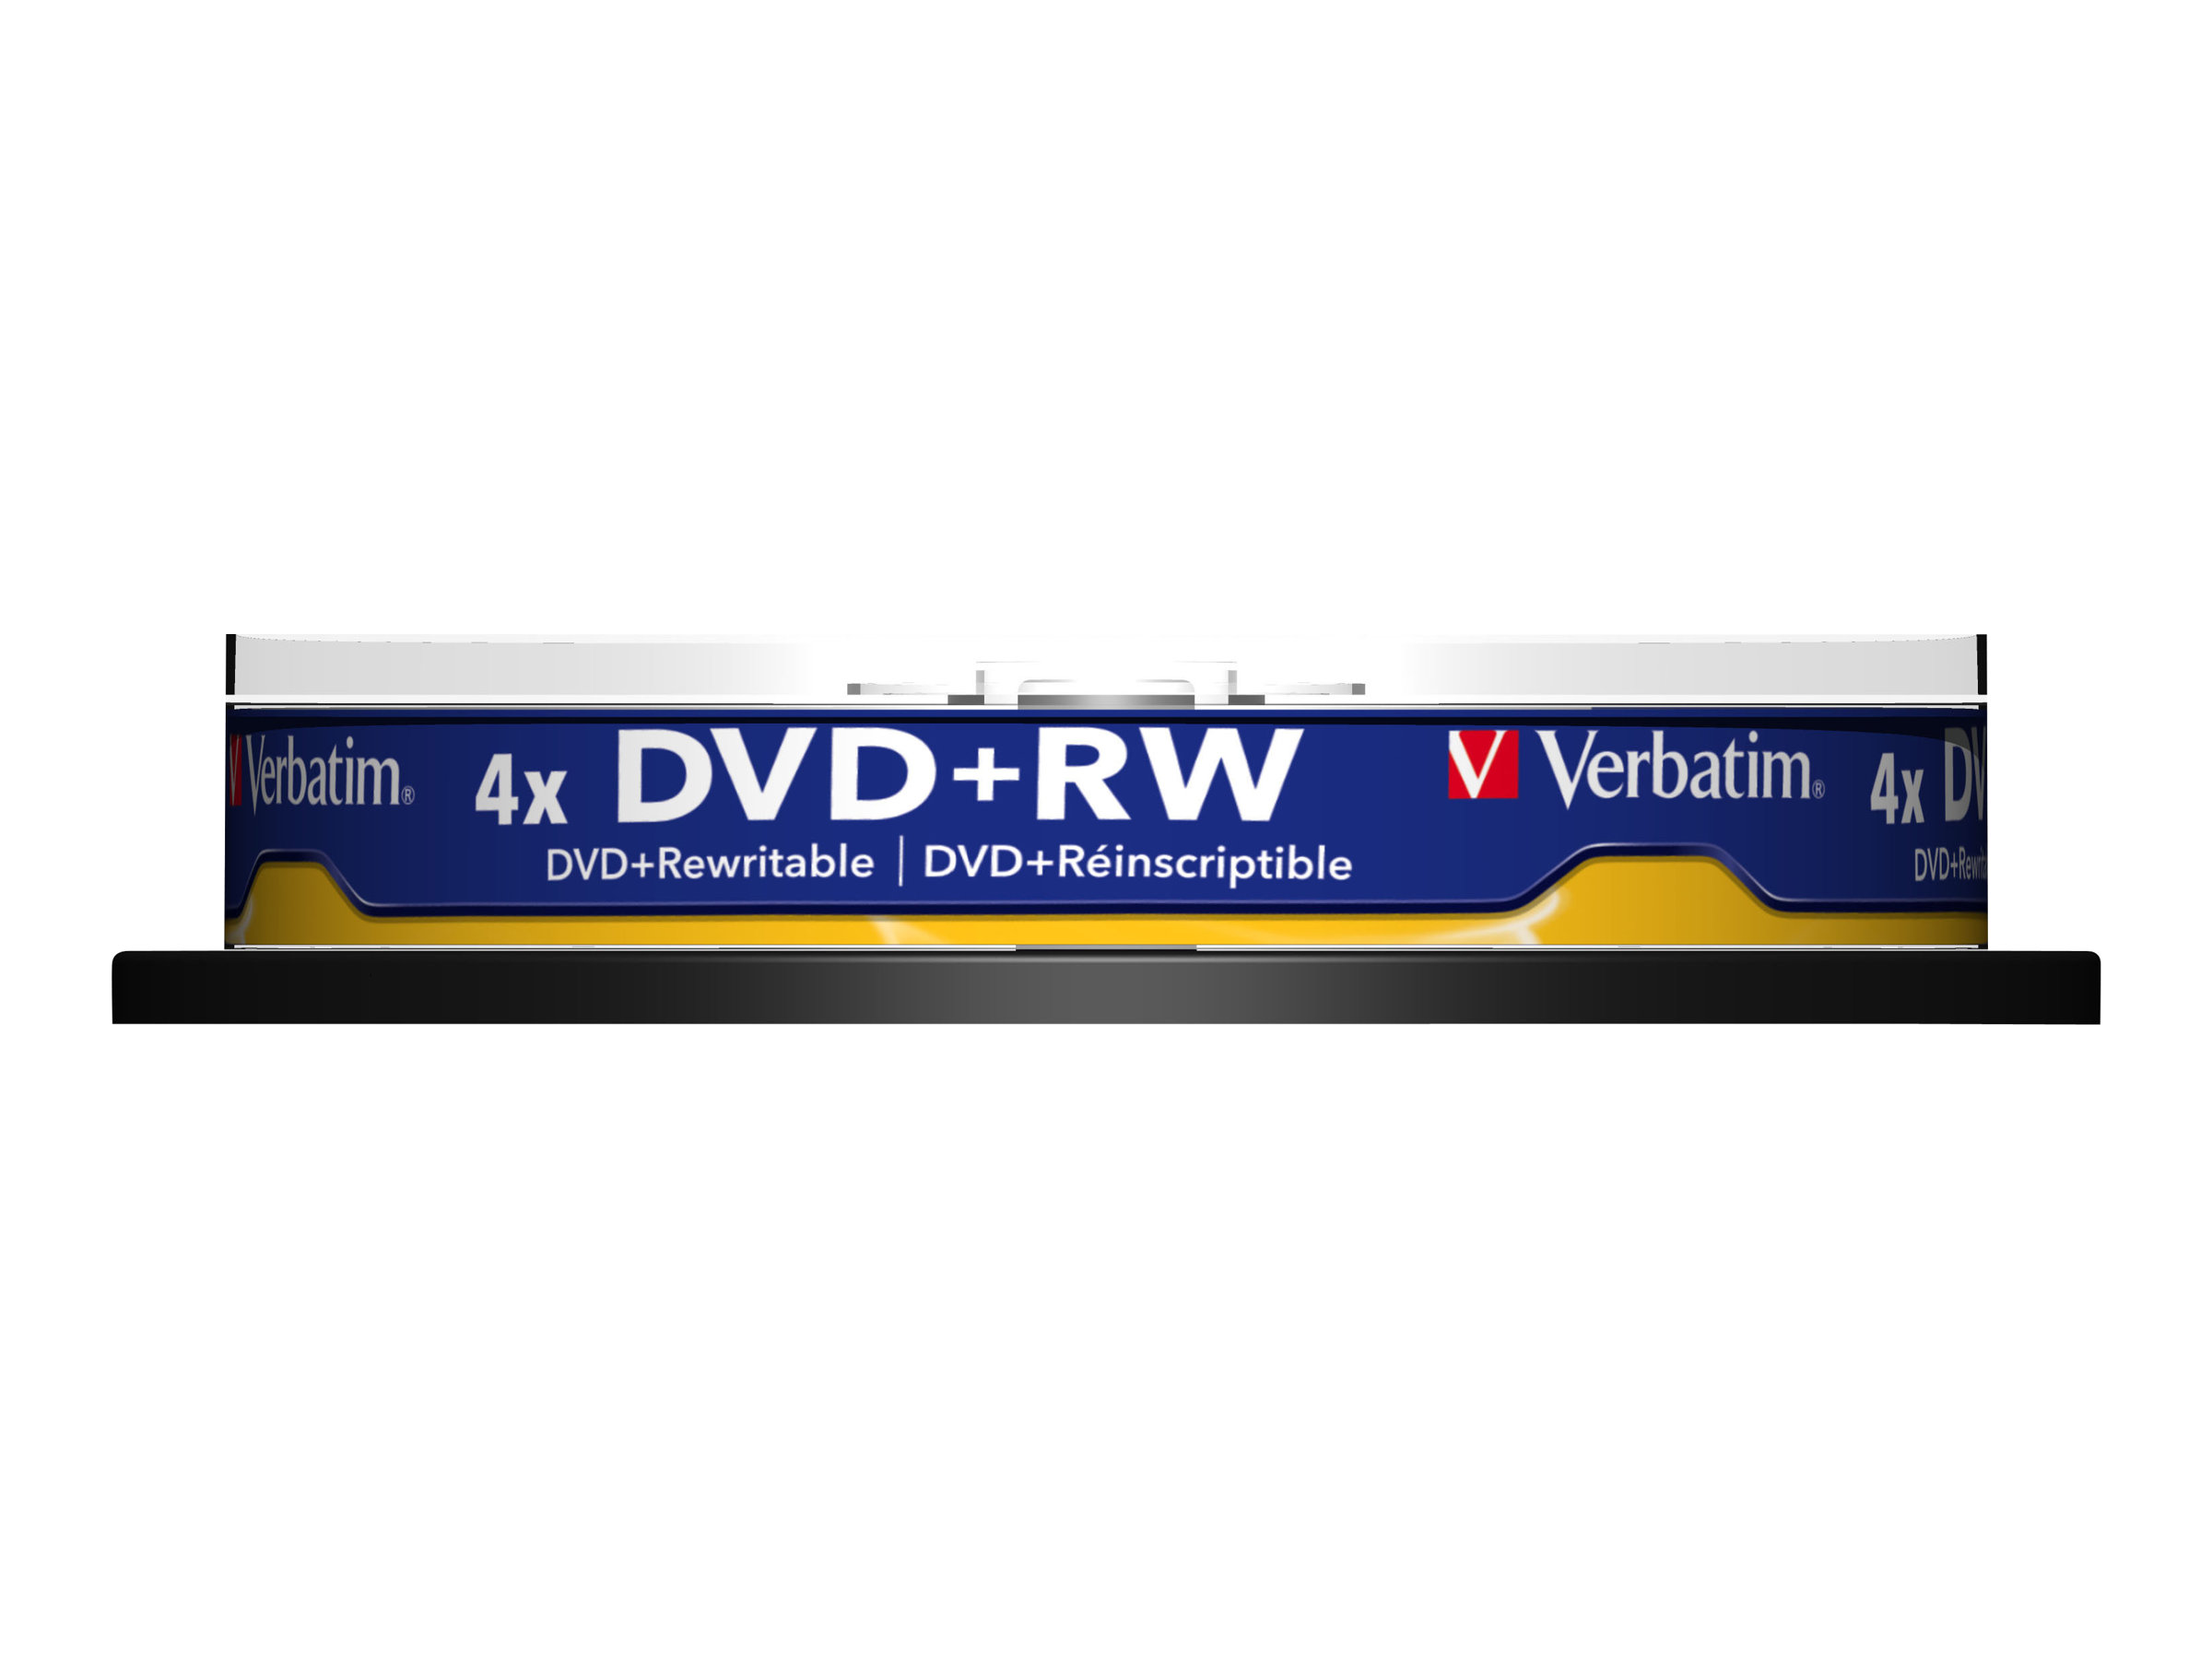 Verbatim 10 x DVD+RW - 4.7 GB (120 Min.) 4x